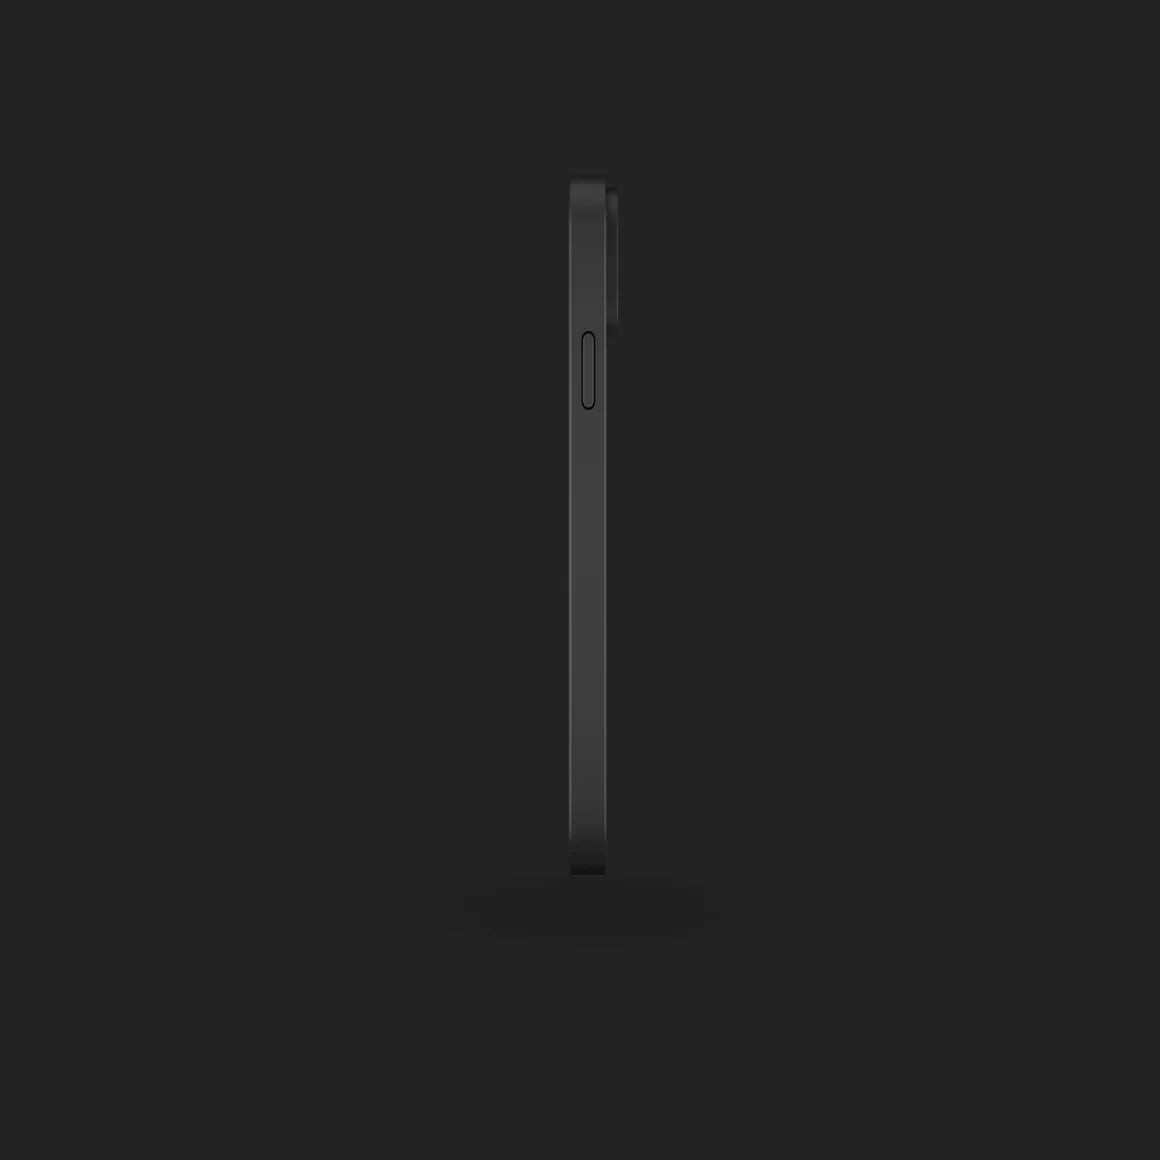 Bumper iPhone 12 Pro Max Case - Black